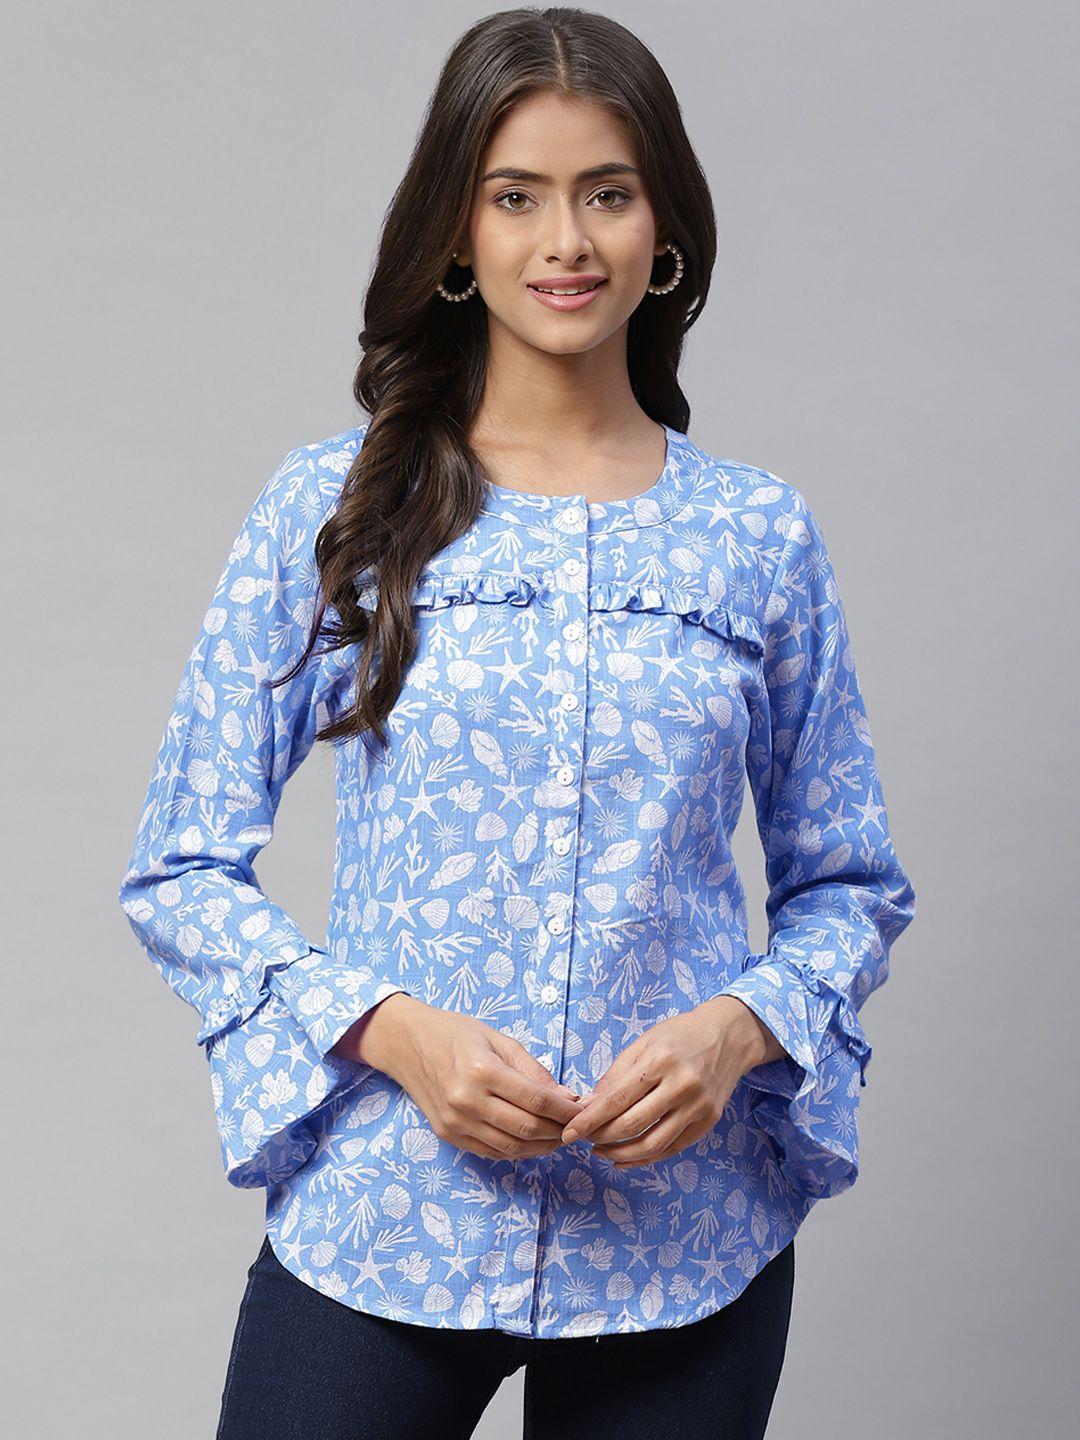 ayaany women blue & white print ruffles pure cotton shirt style top